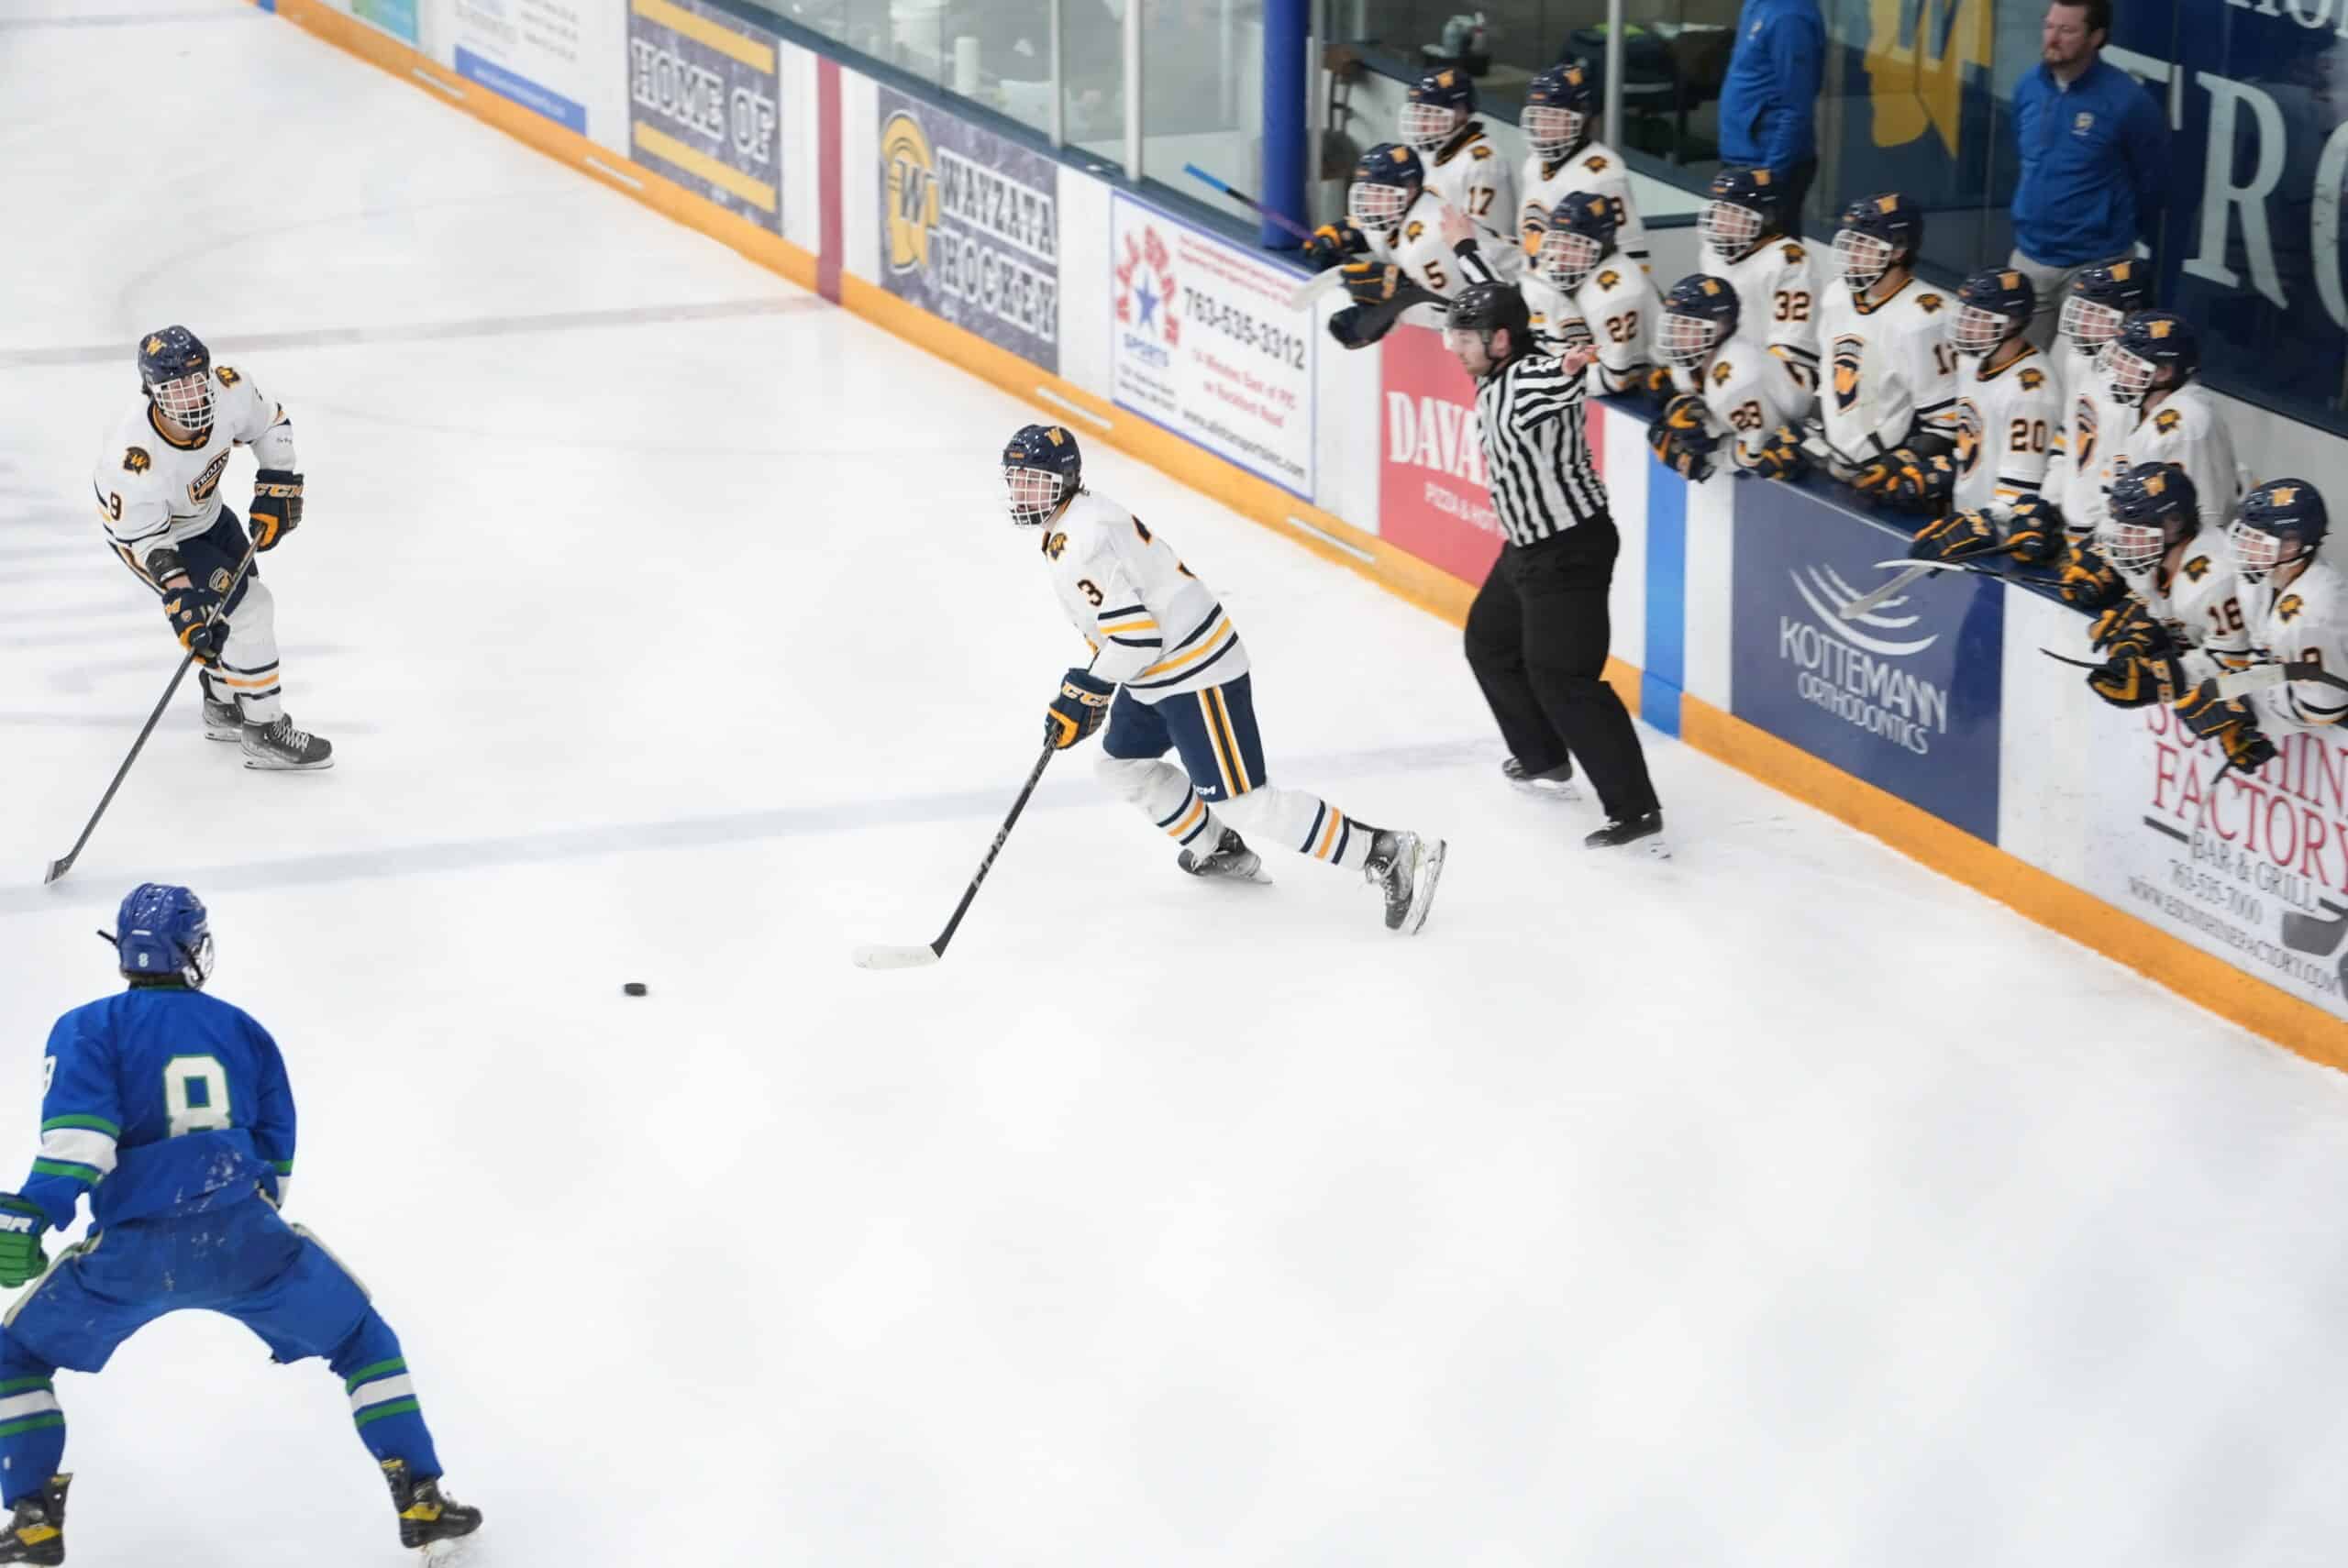 Engage with High School Hockey Fans through Rink Boards in Wayzata